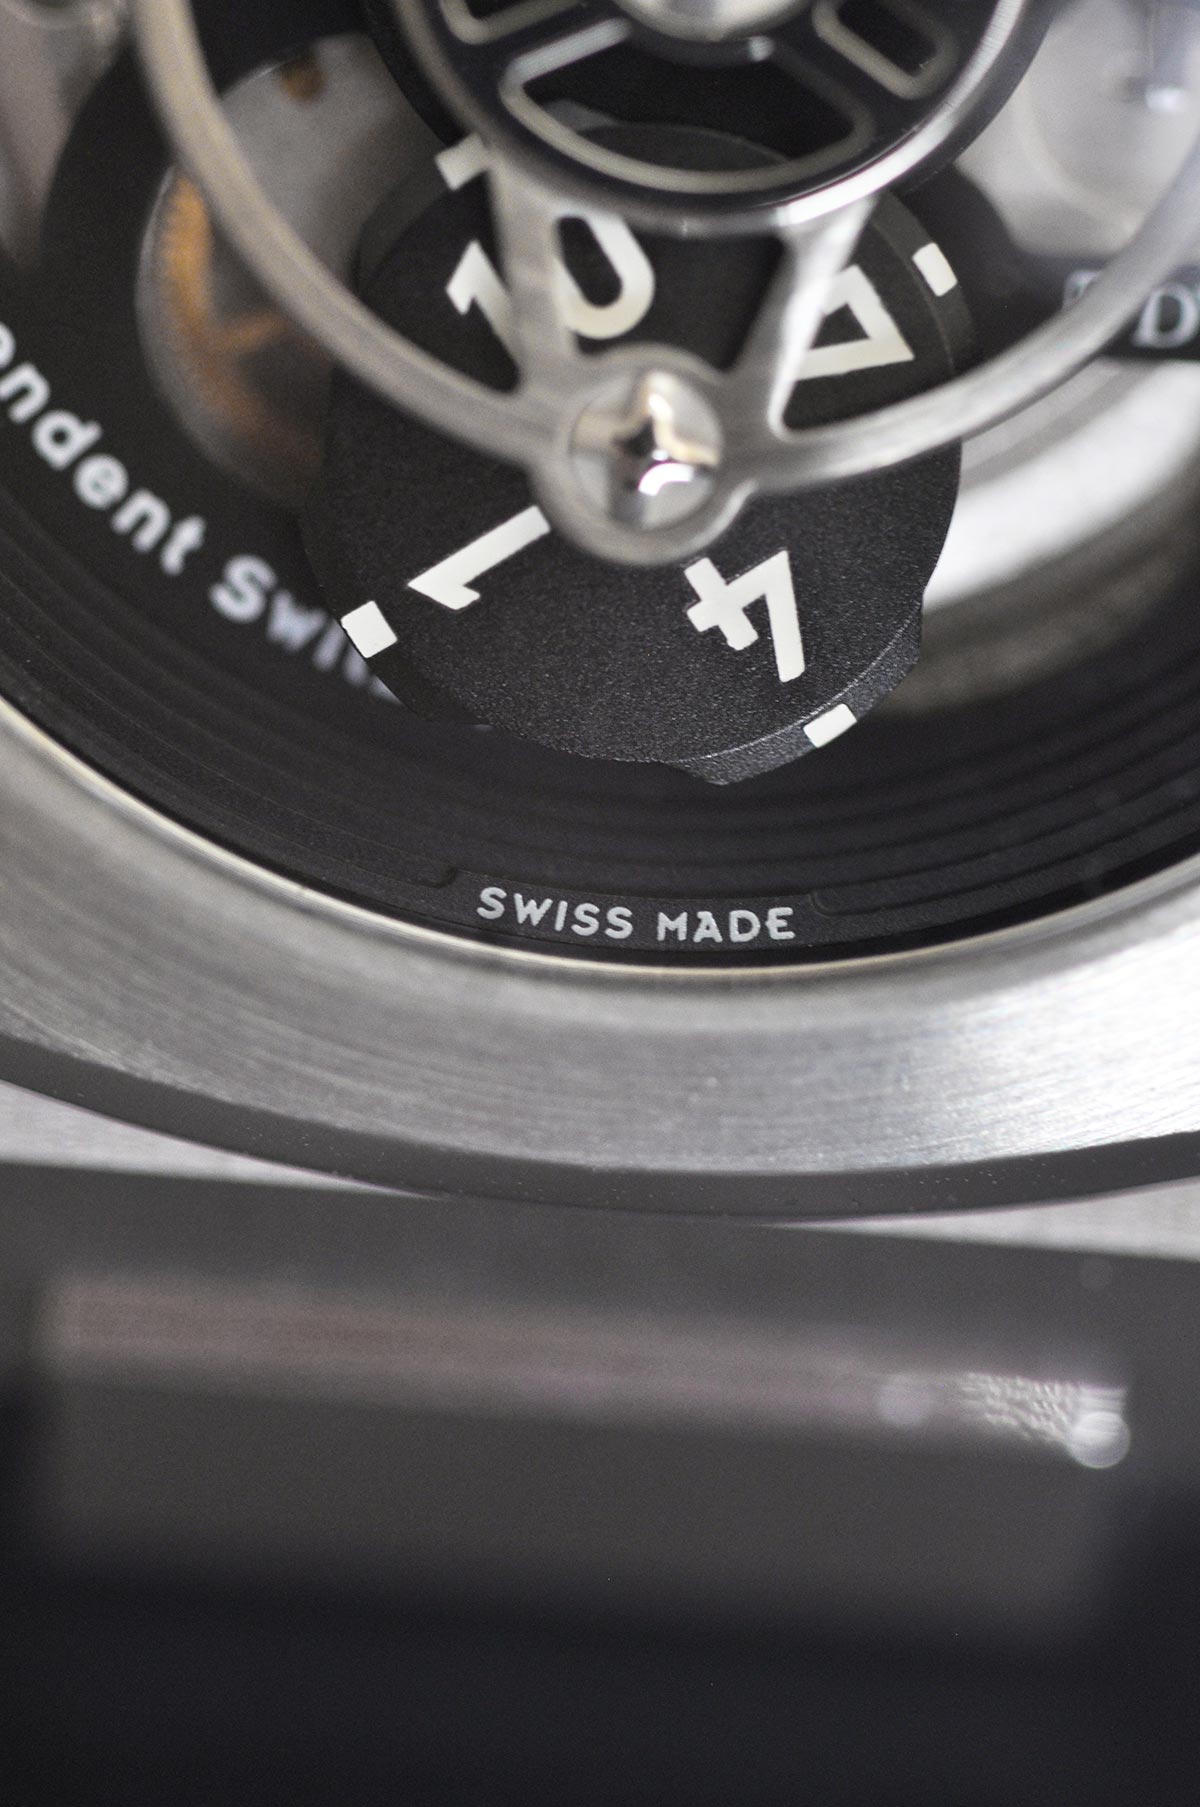 design watch designer swiss watch brands like the DWISS M3W